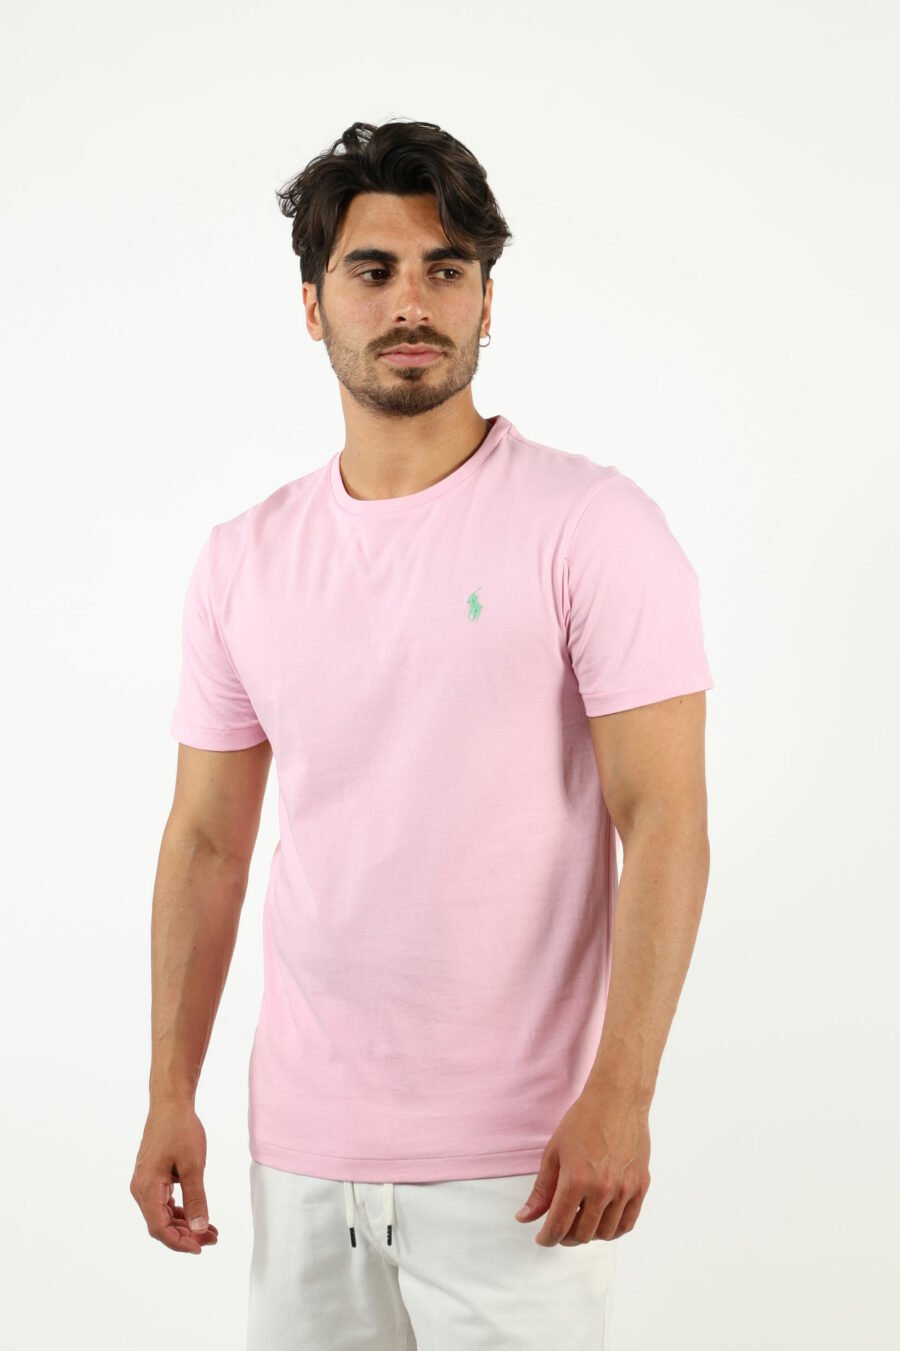 Camiseta rosa con minilogo "polo" verde - number14056